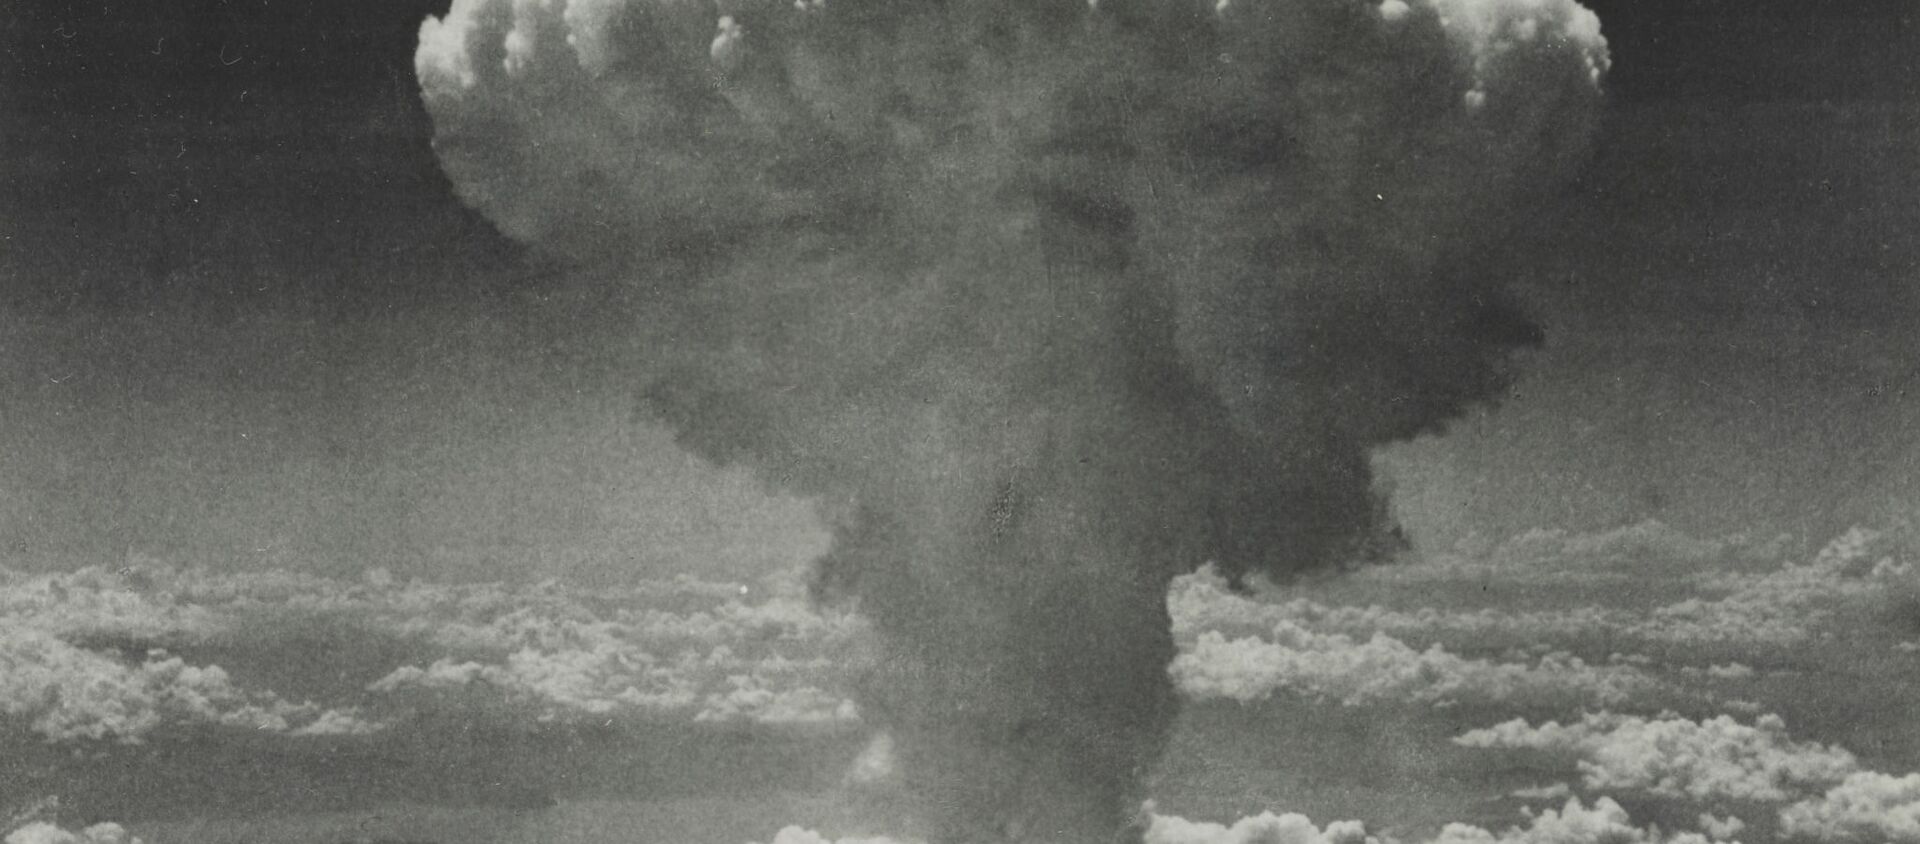 Mushroom cloud over Nagasaki after US dropped atomic bomb codenamed Fat Man on 9 August  - Sputnik International, 1920, 06.08.2020